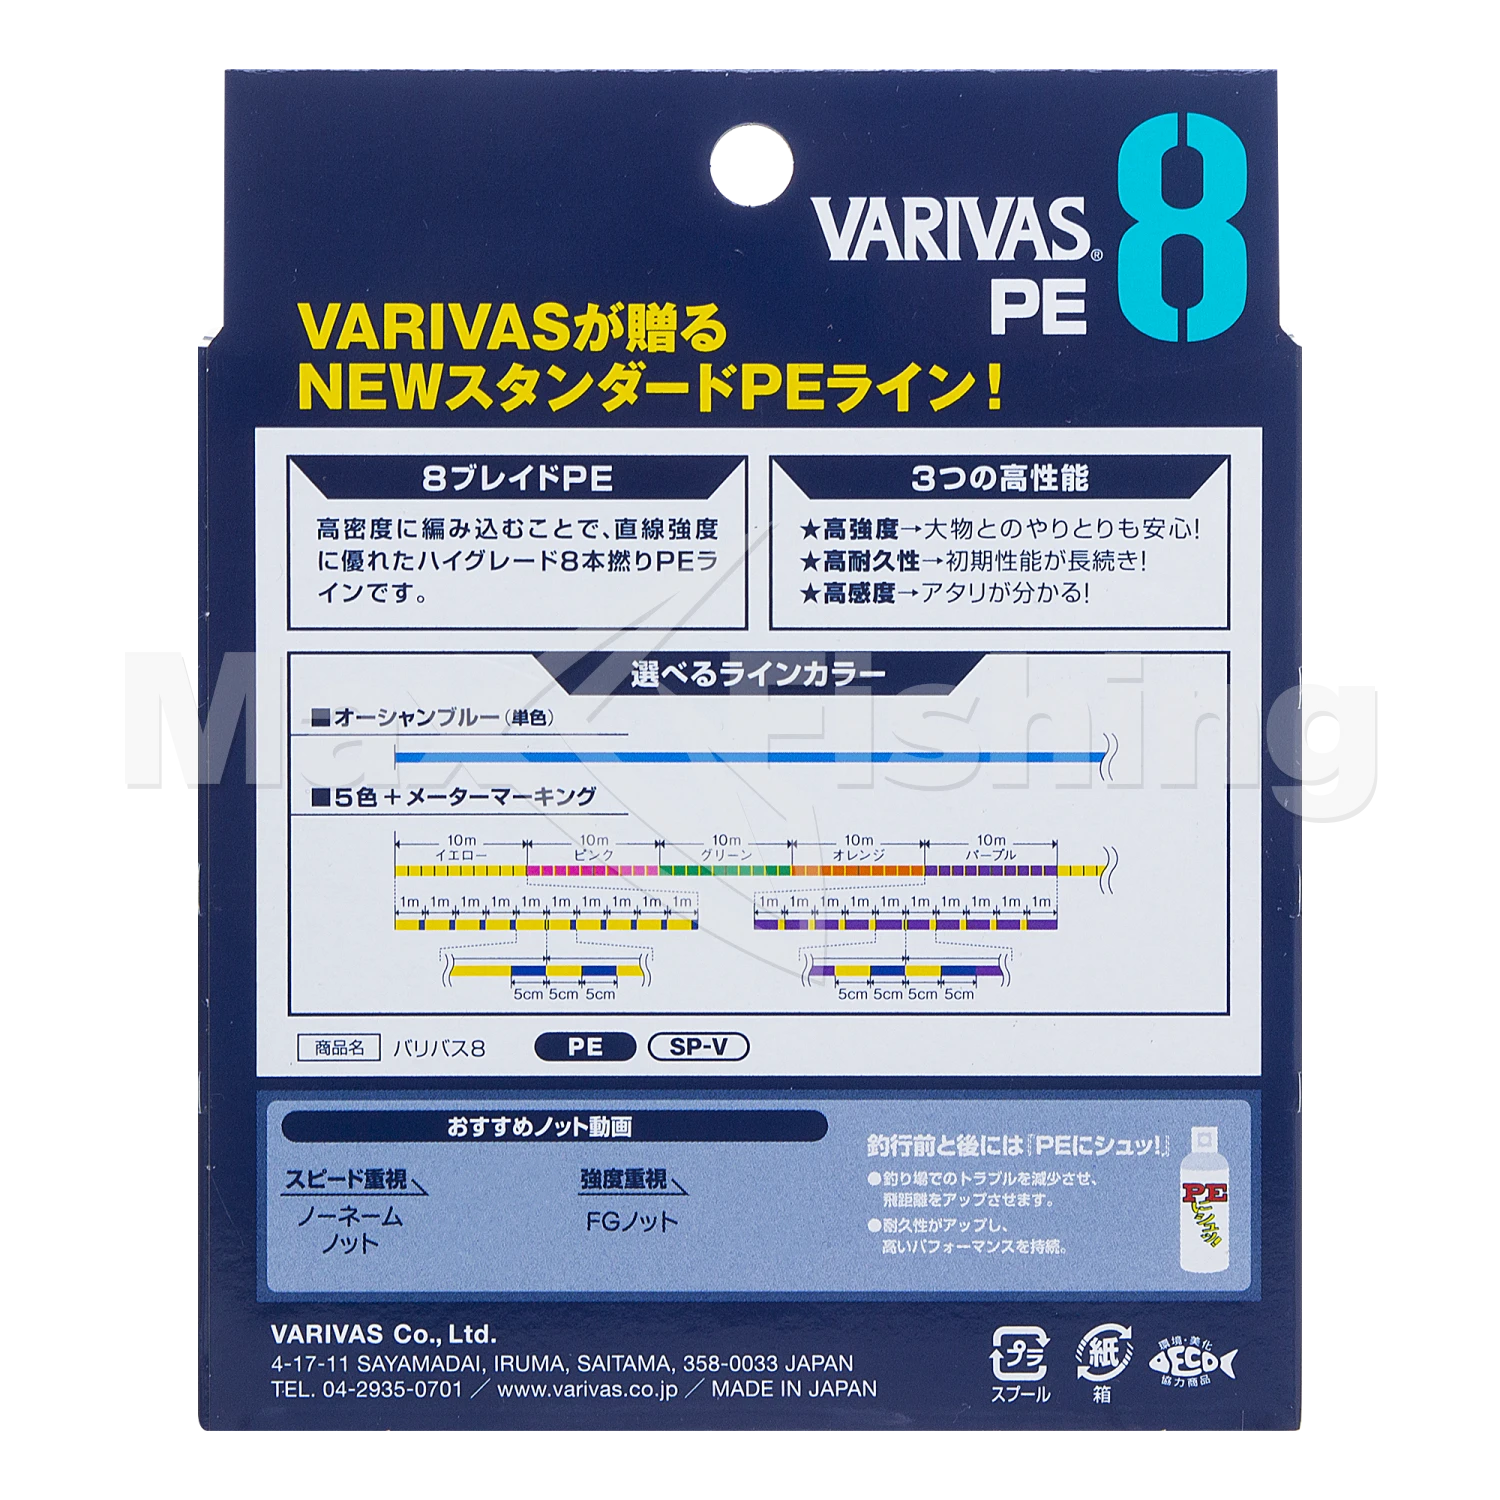 Шнур плетеный Varivas X8 Marking #0,6 0,128мм 200м (multicolor)